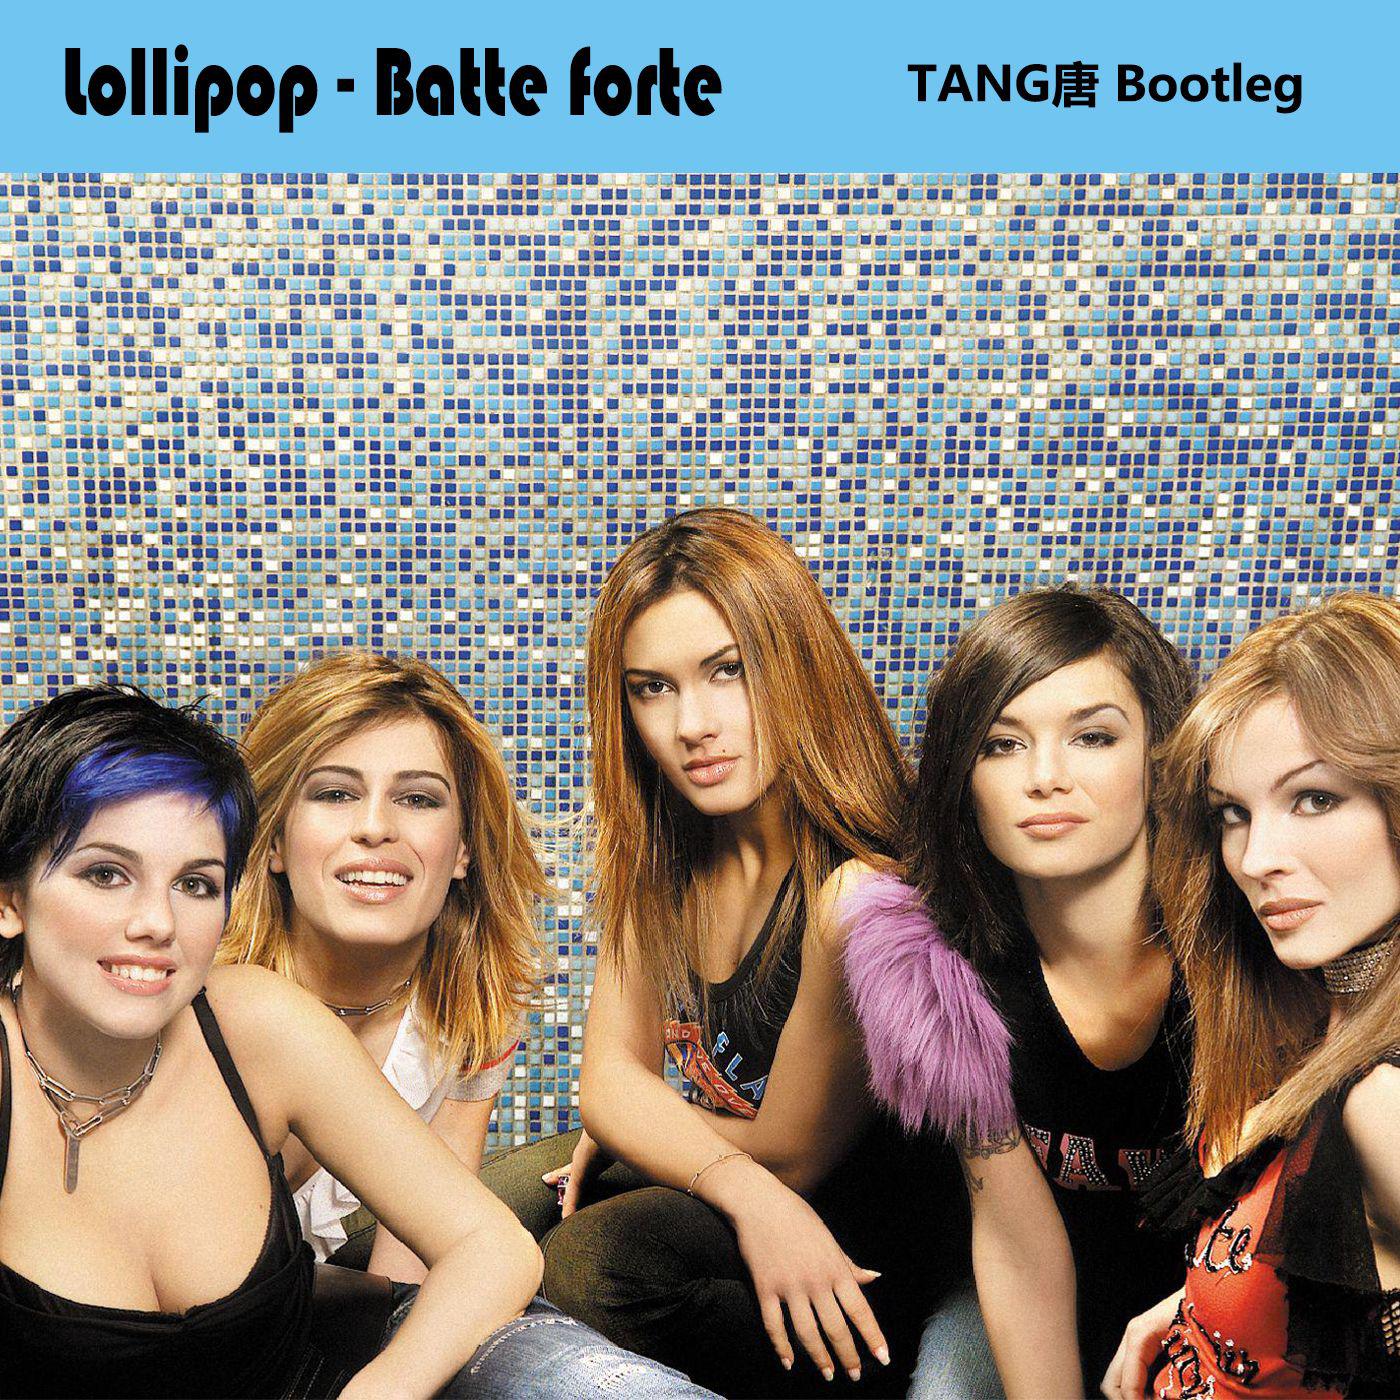 TANG唐 - Lollipop,Subside - Batte forte (TANG唐 Remix)